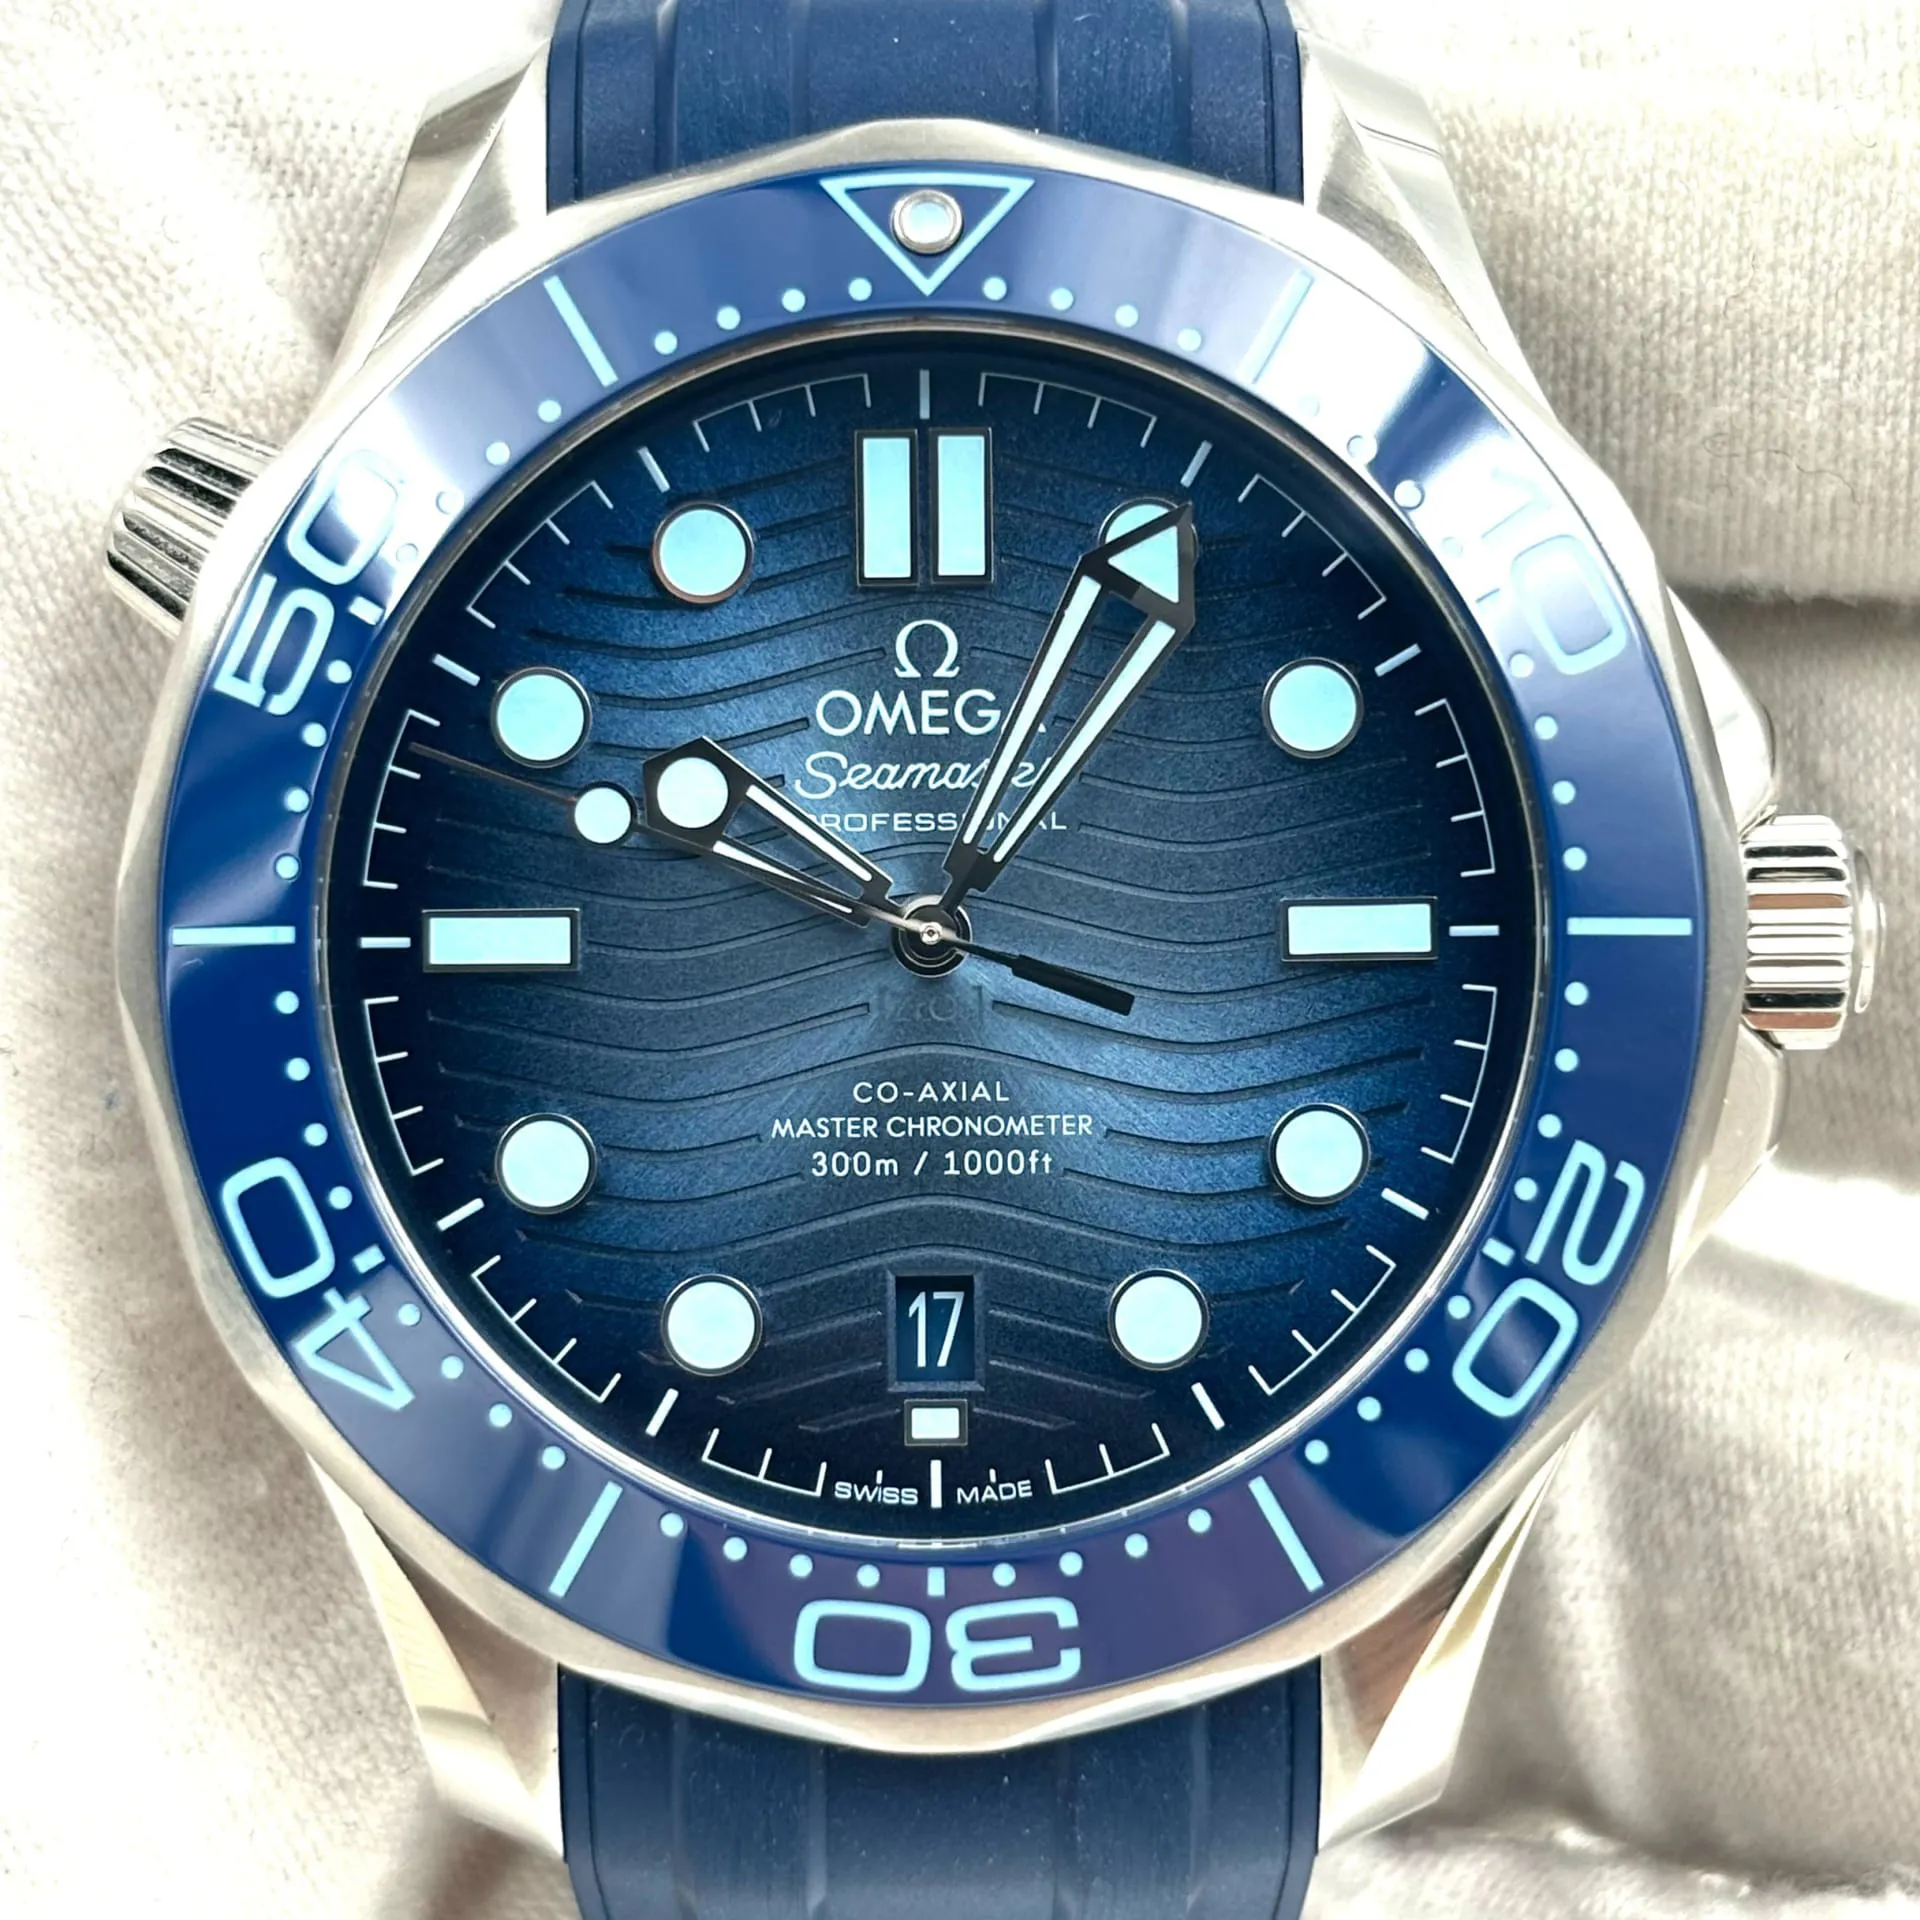 Omega Seamaster Diver 300M 210.32.42.20.03.002 42mm Ceramic Blue